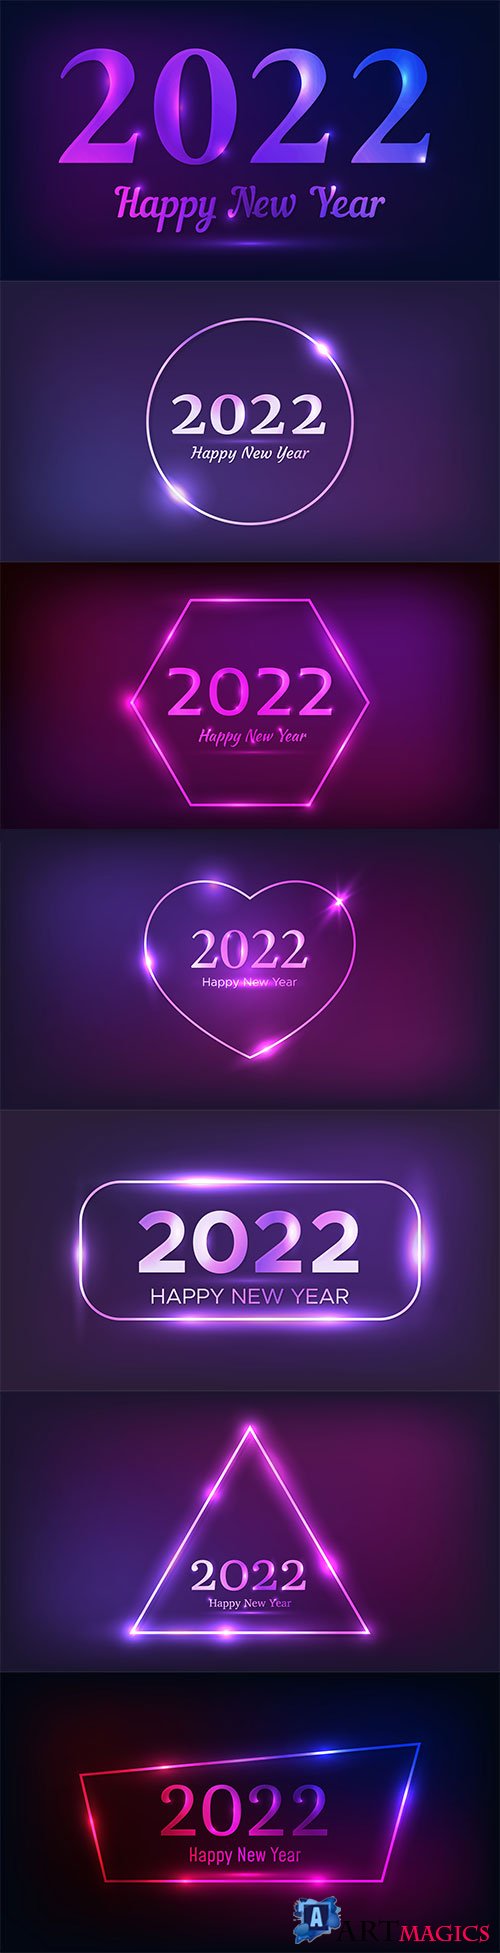 2022 happy new year neon vector background